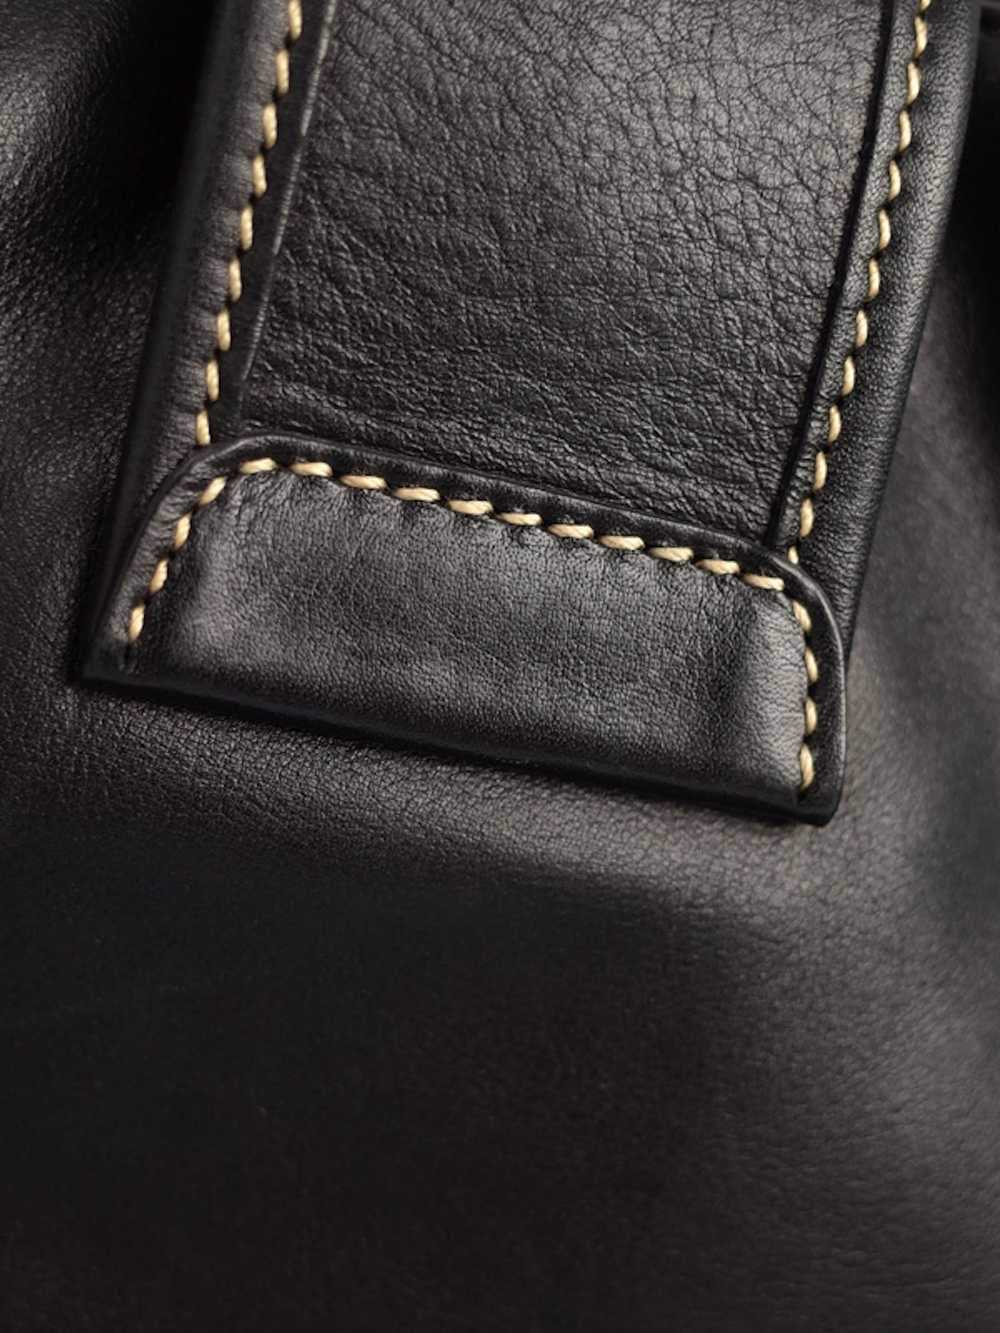 Prada Prada Leather Shoulder Bag Black - image 5